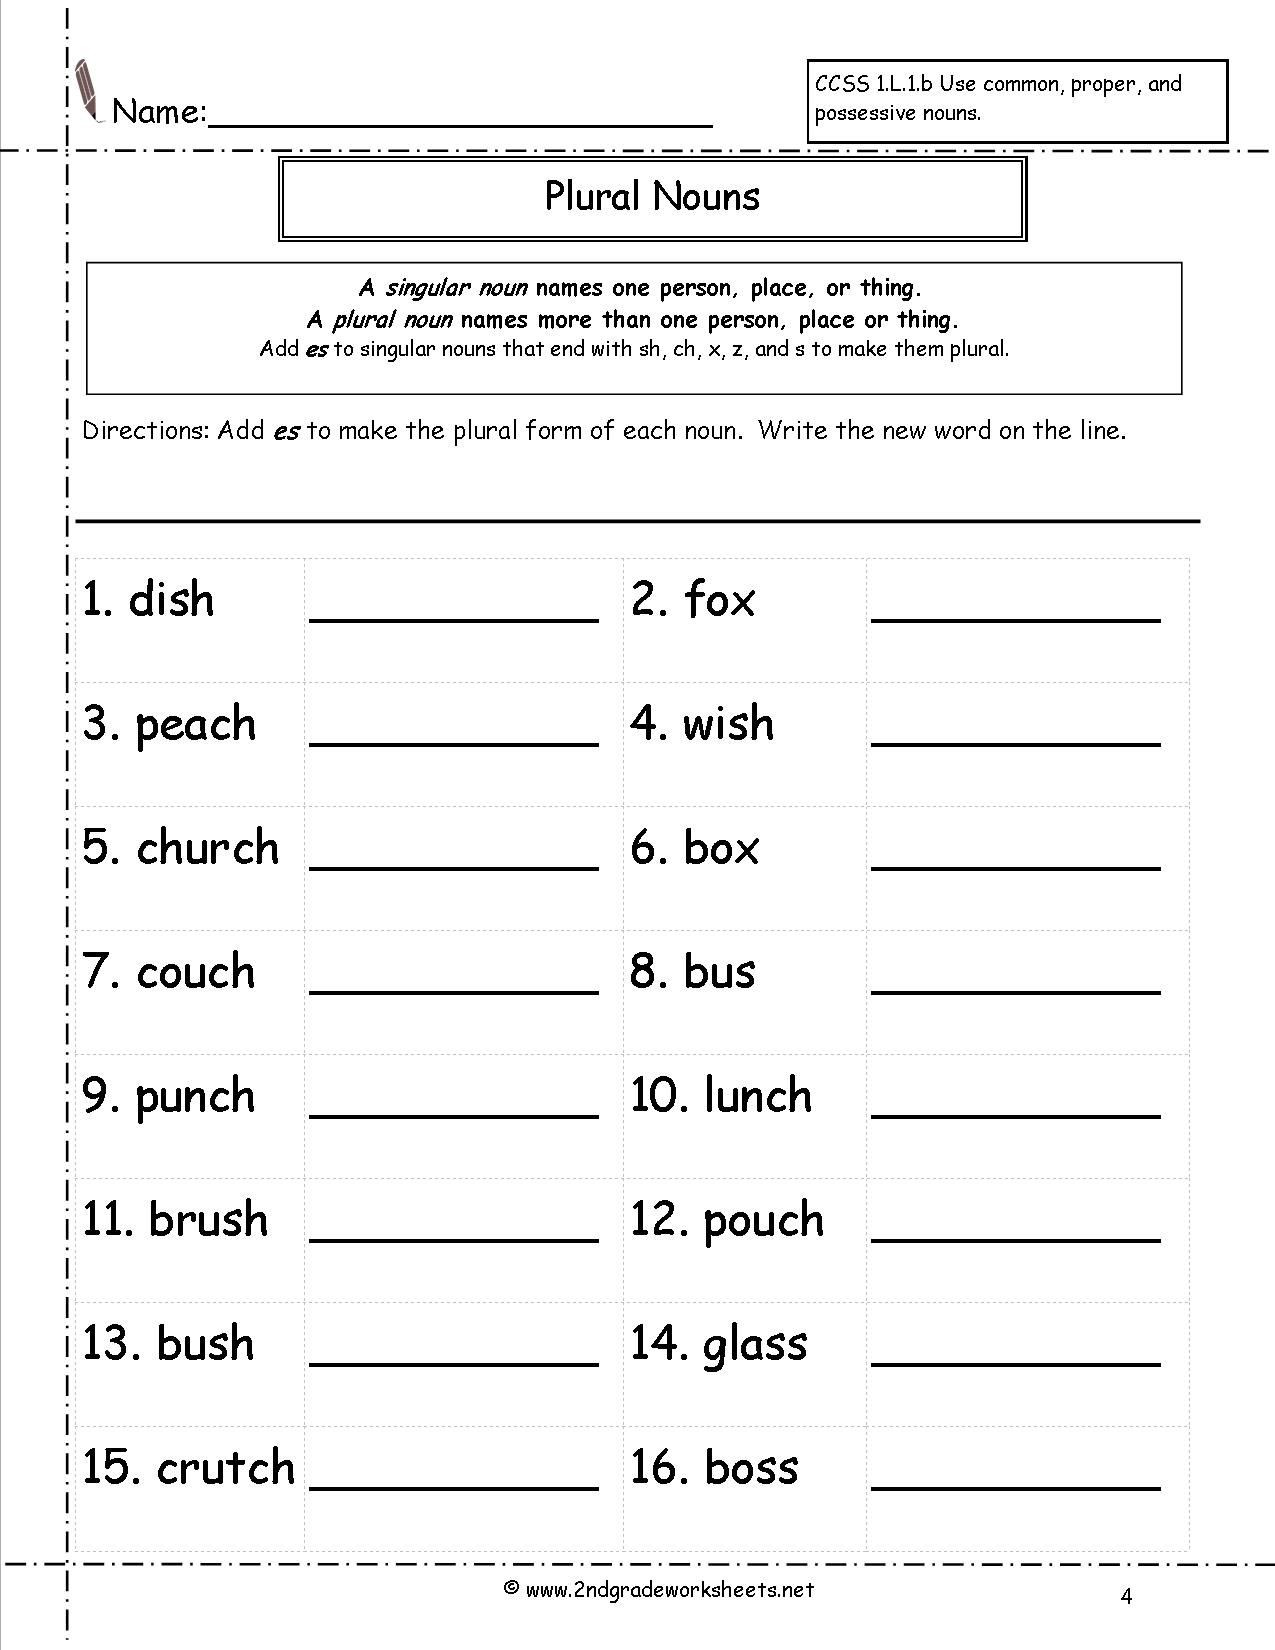 Plurals Worksheet 3rd Grade Singular and Plural Nouns Worksheet